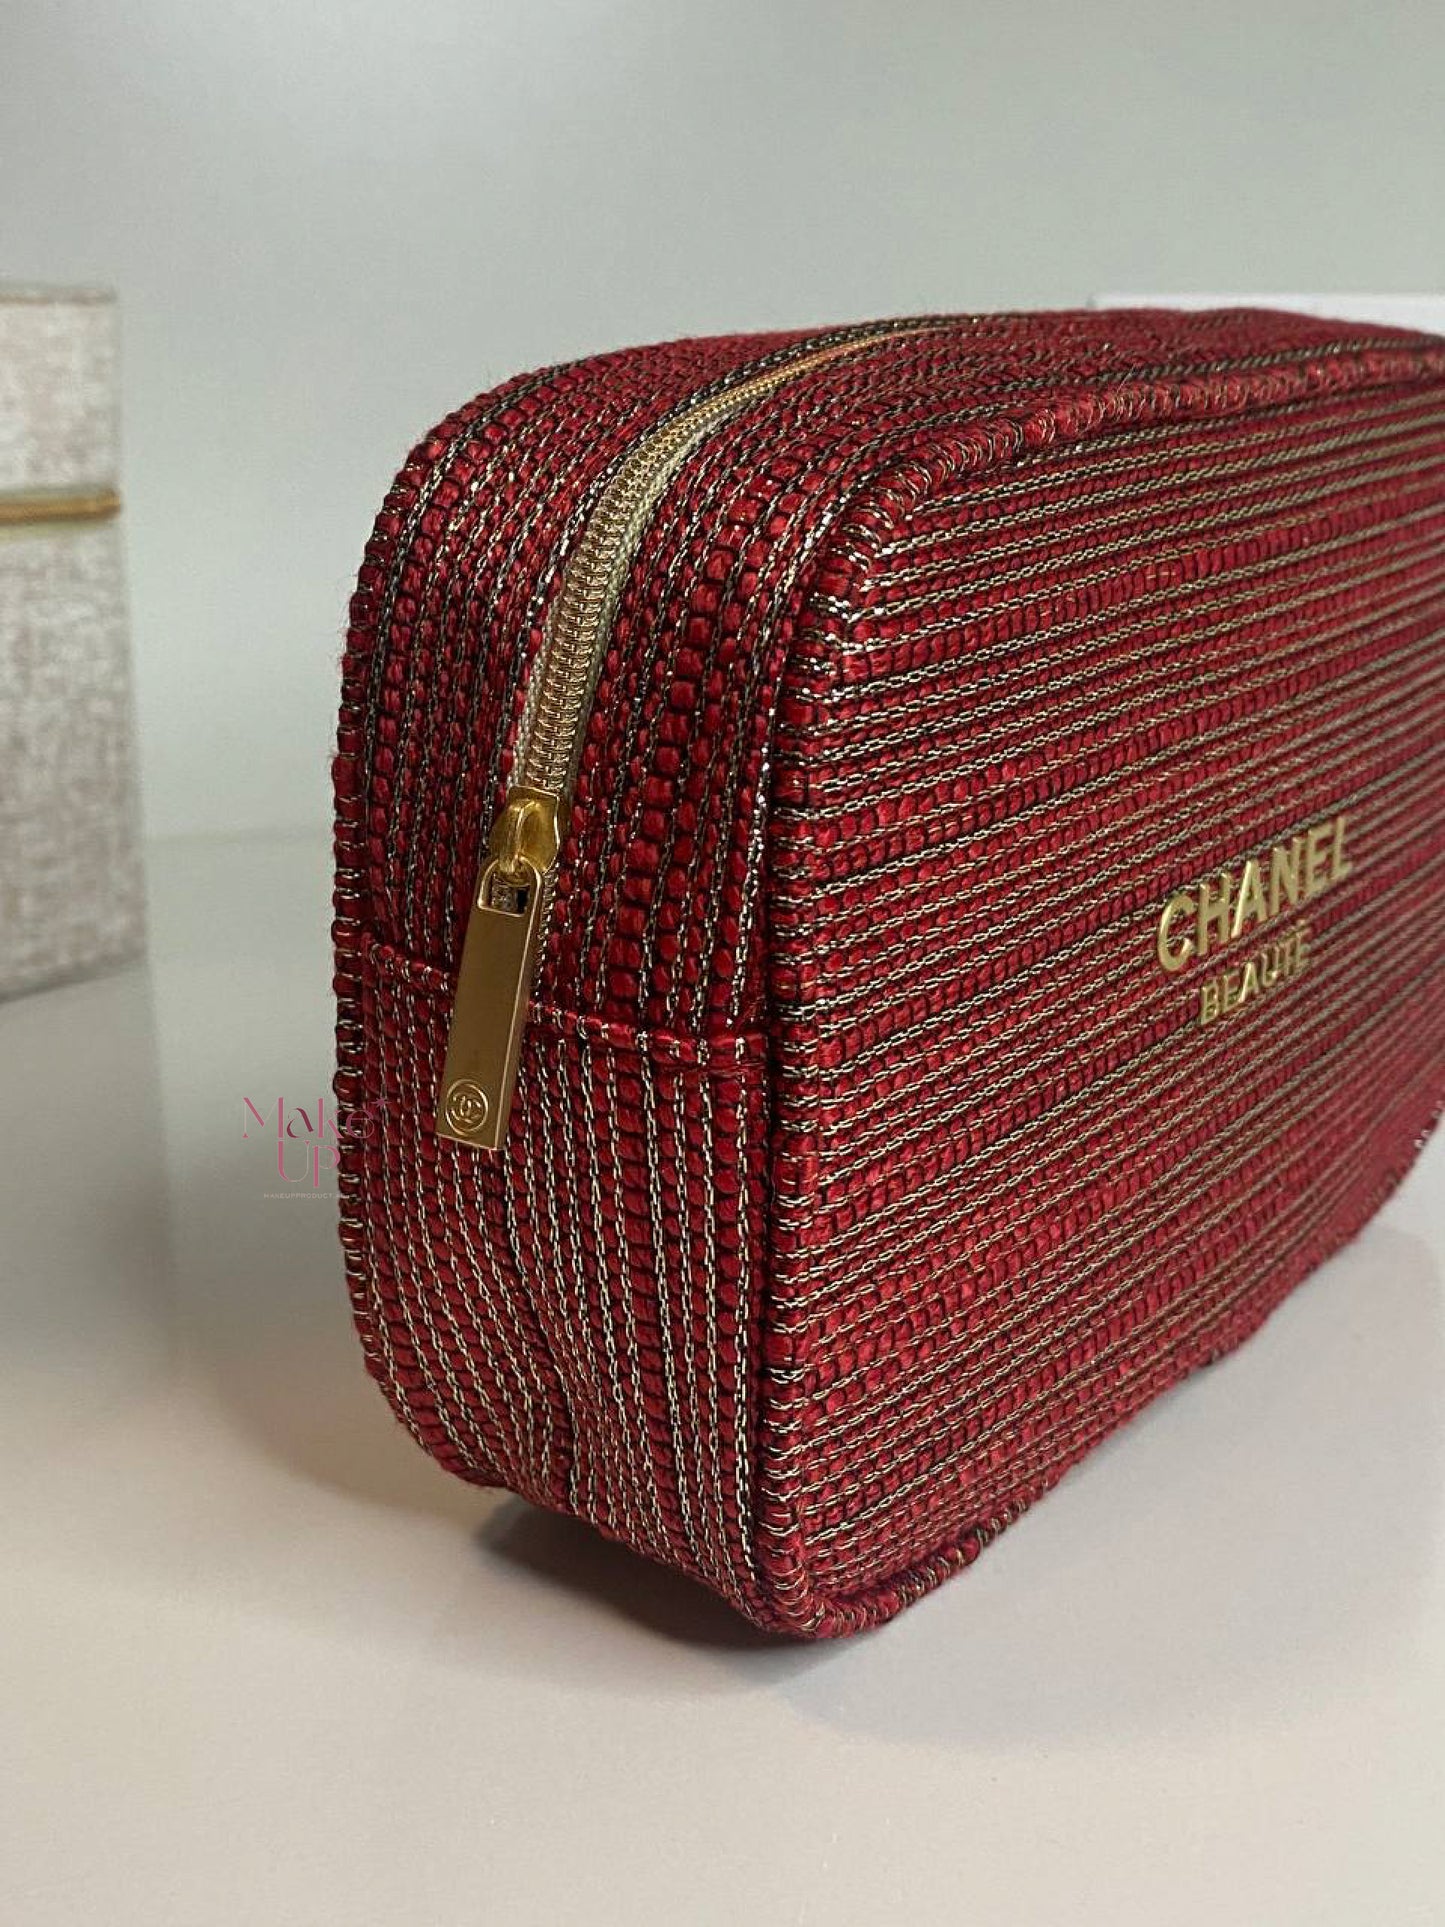 Chanel Beauty Red Tweed Bag